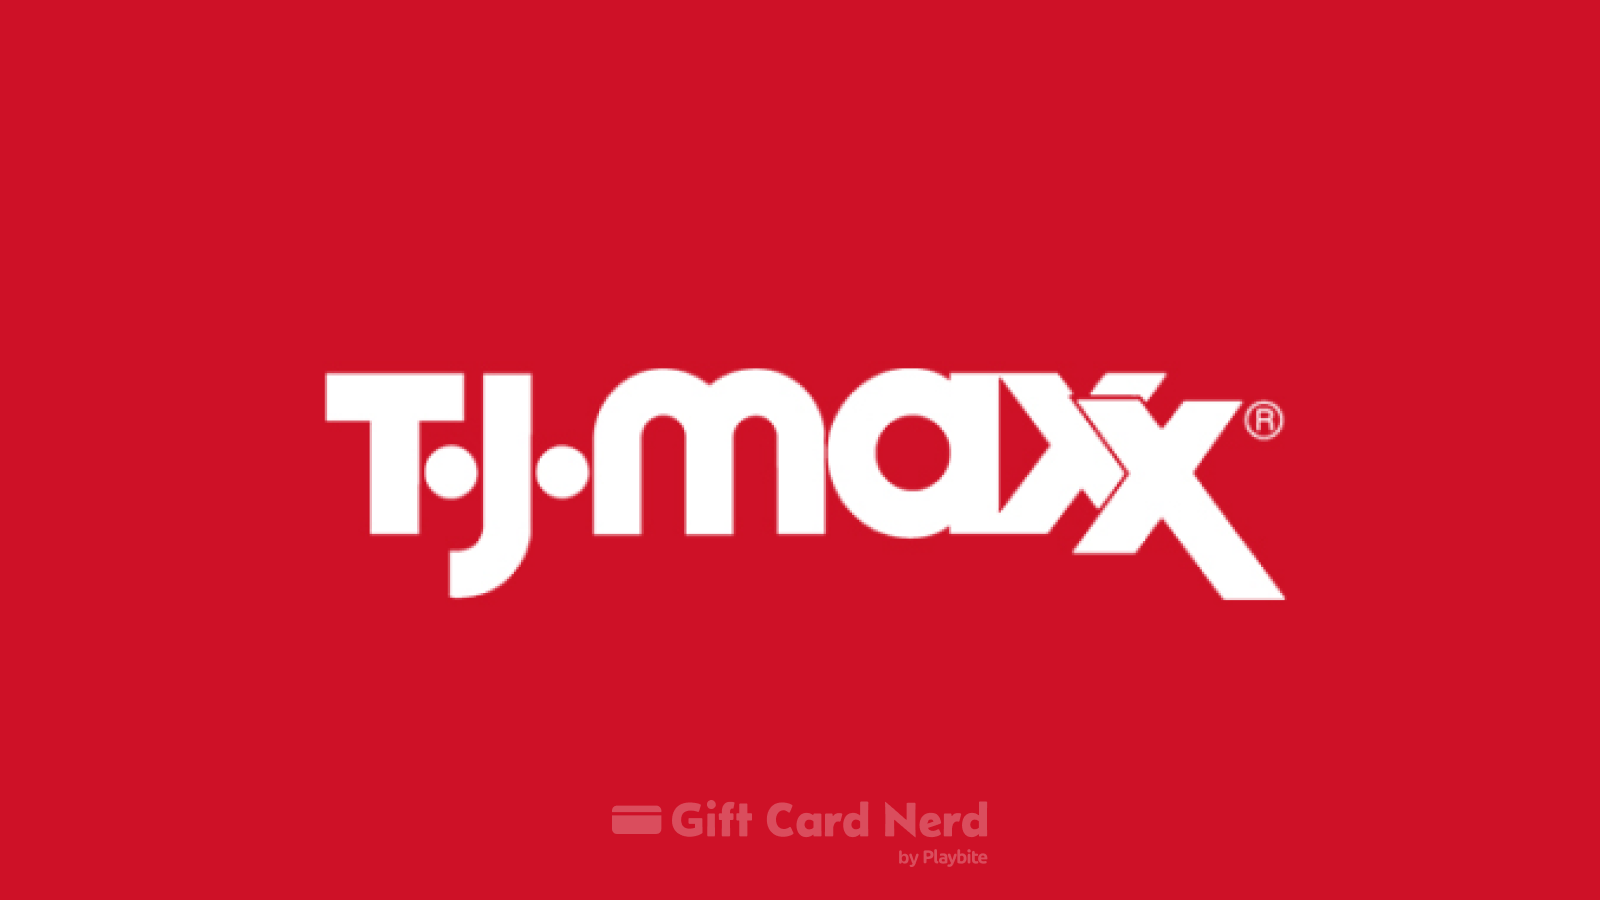 Can I Use a TJ Maxx Gift Card on Venmo?